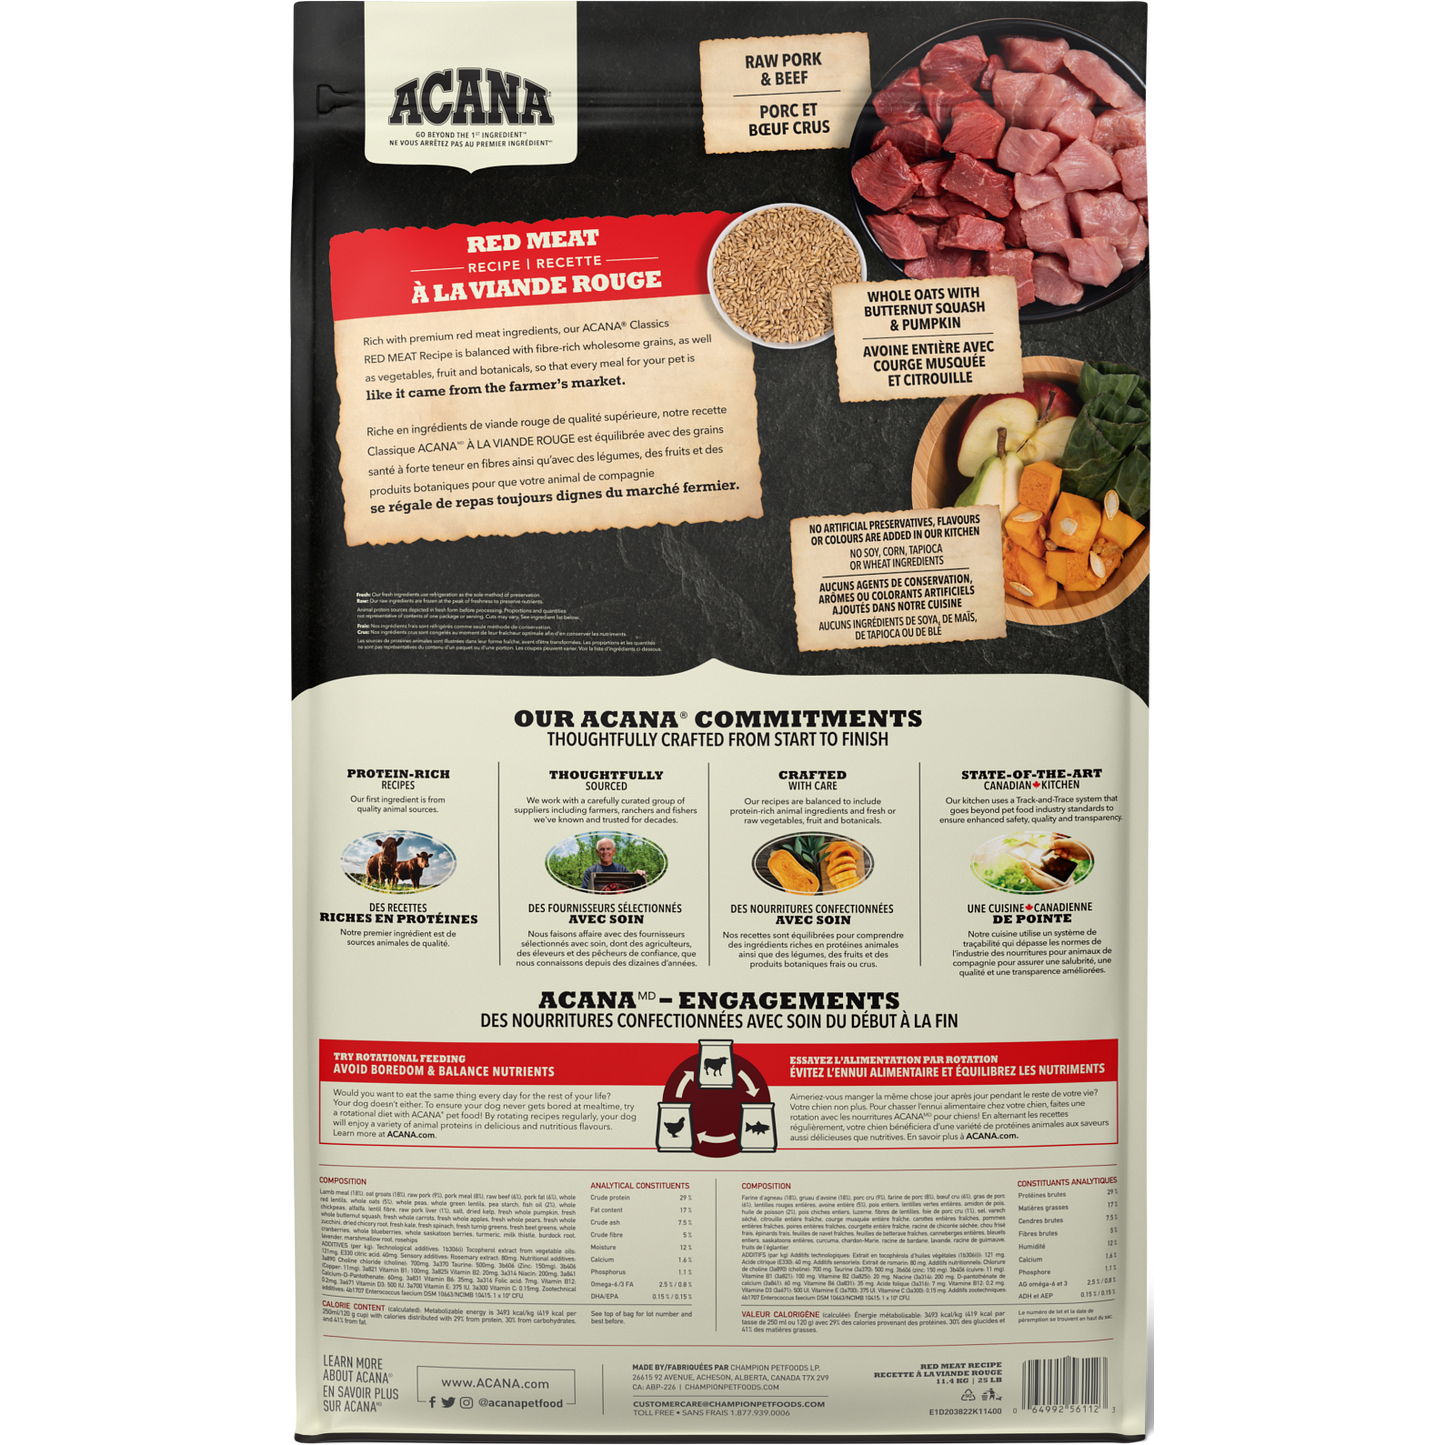 ACANA® CLASSICS Red Meat Recipe